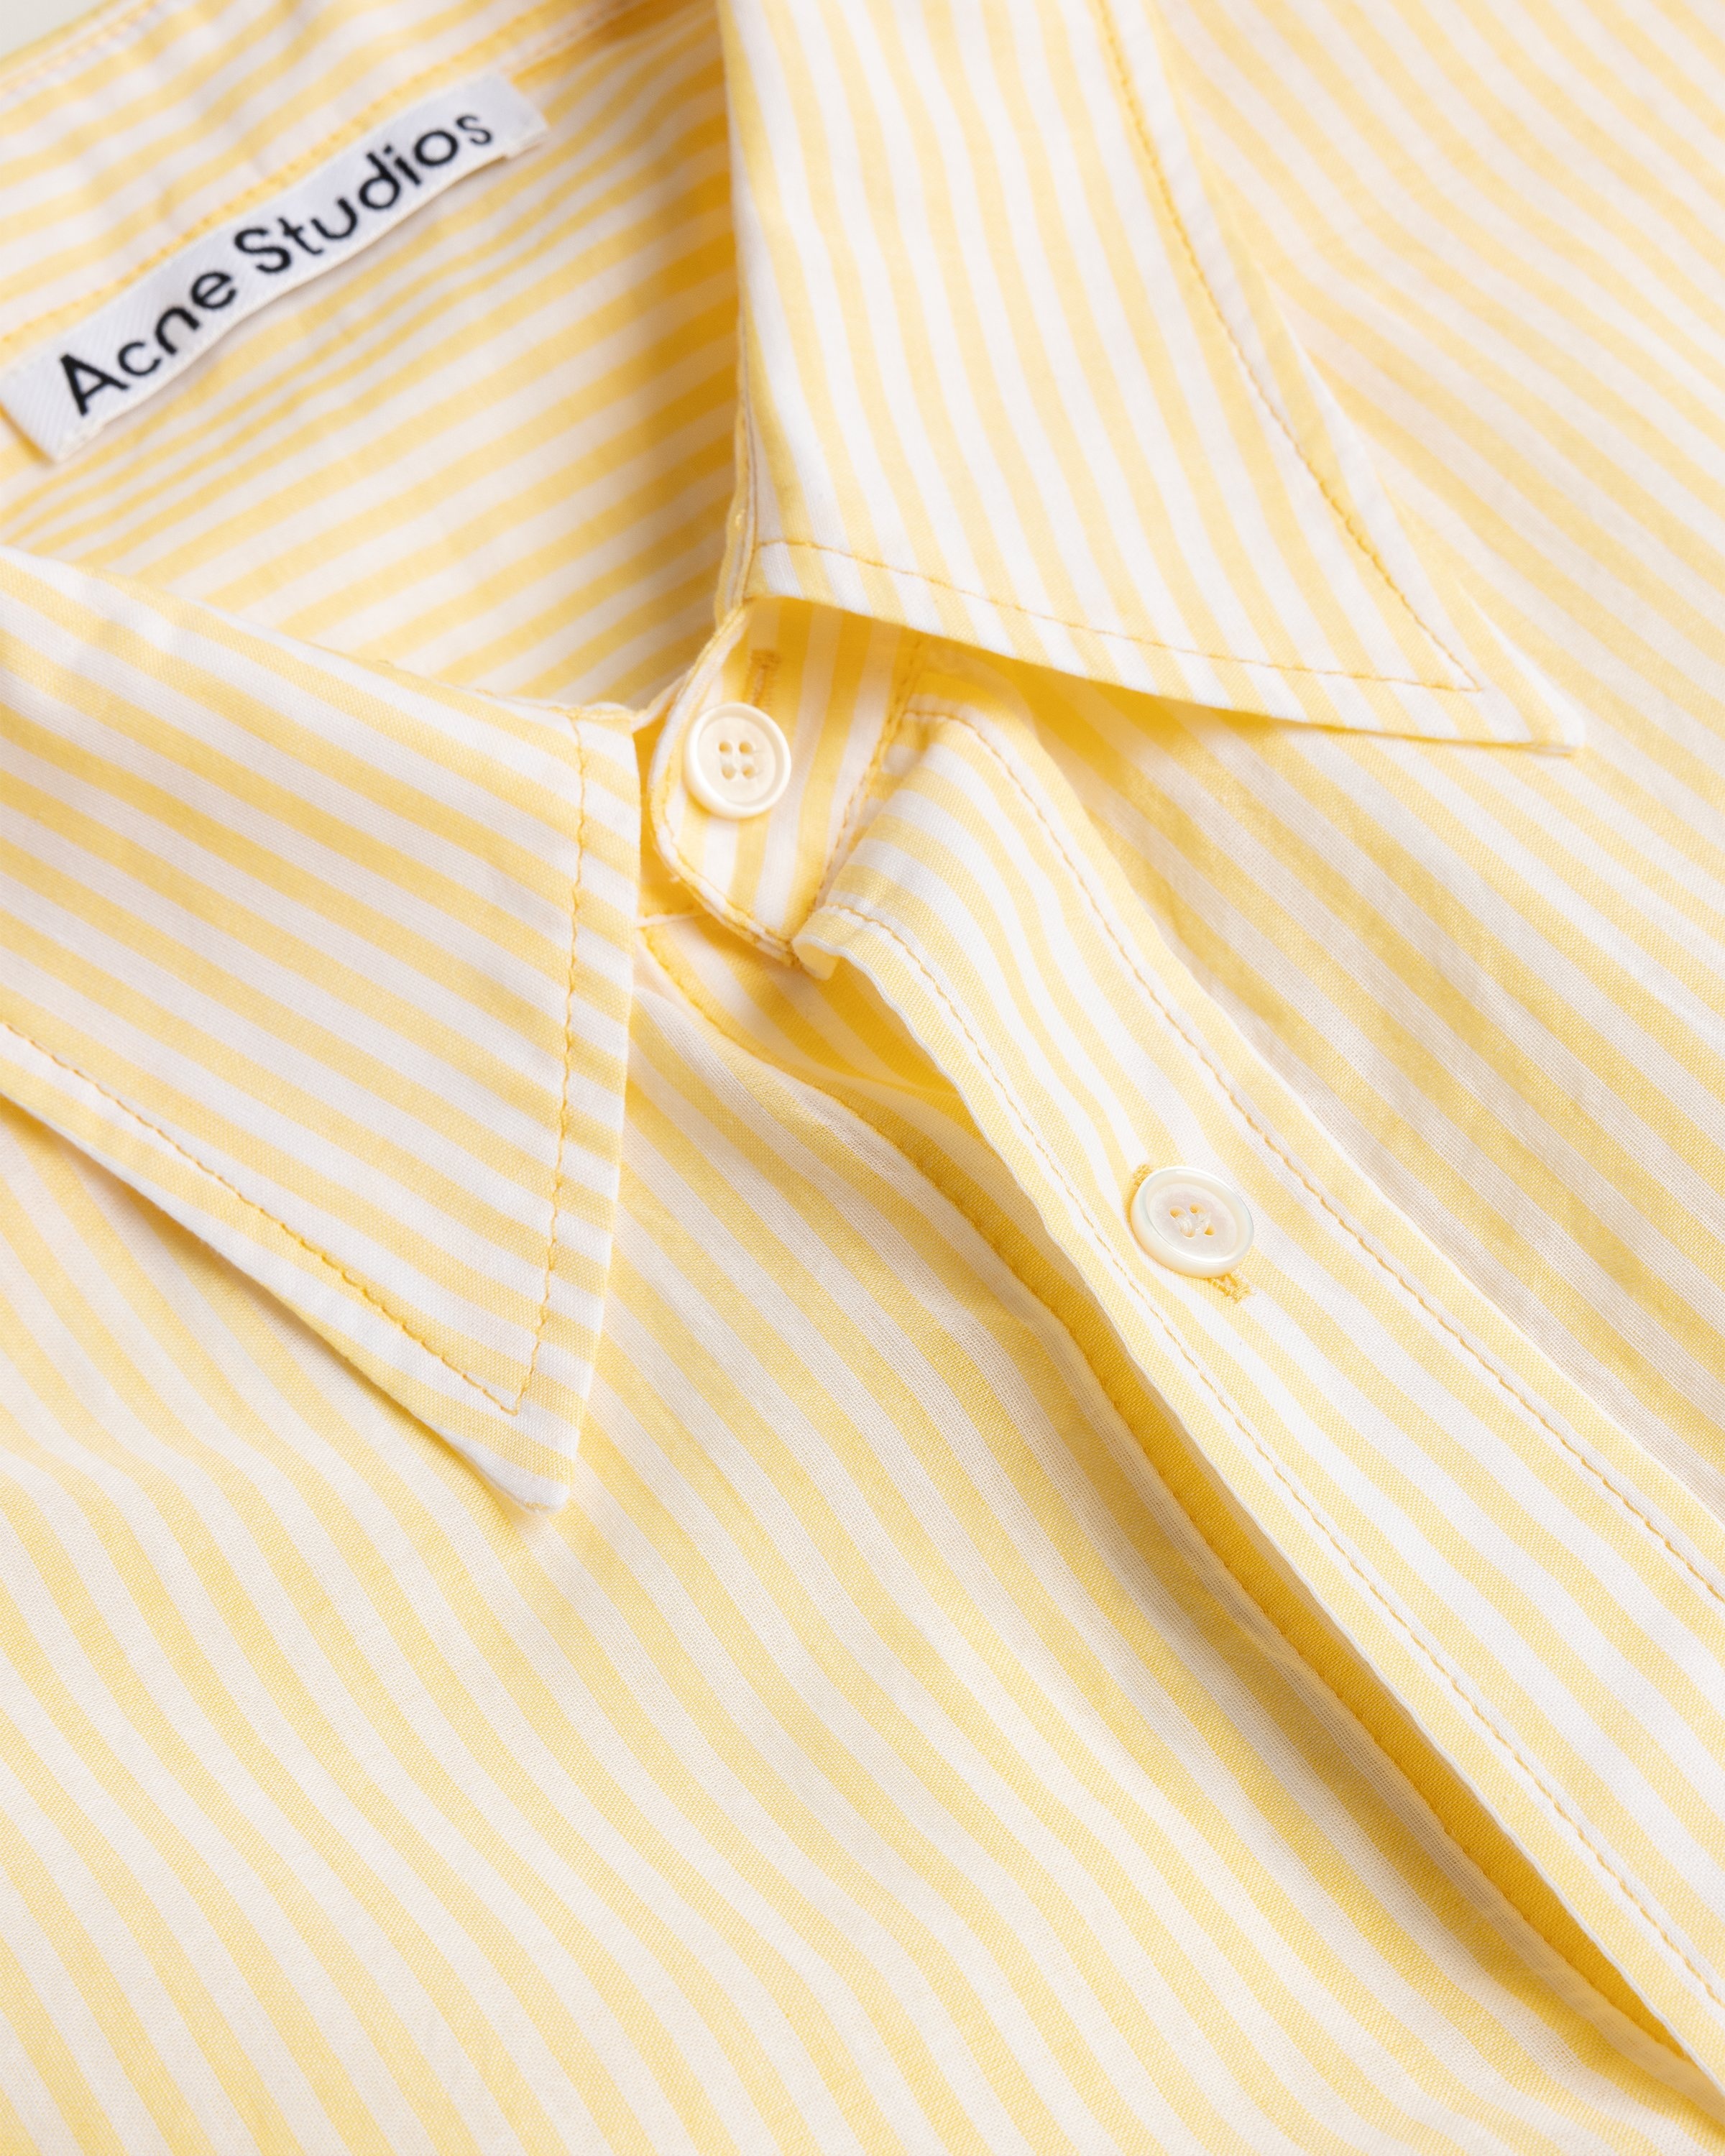 Acne Studios – Short Sleeve Button-Up Shirt Yellow - Shirts - Yellow - Image 5